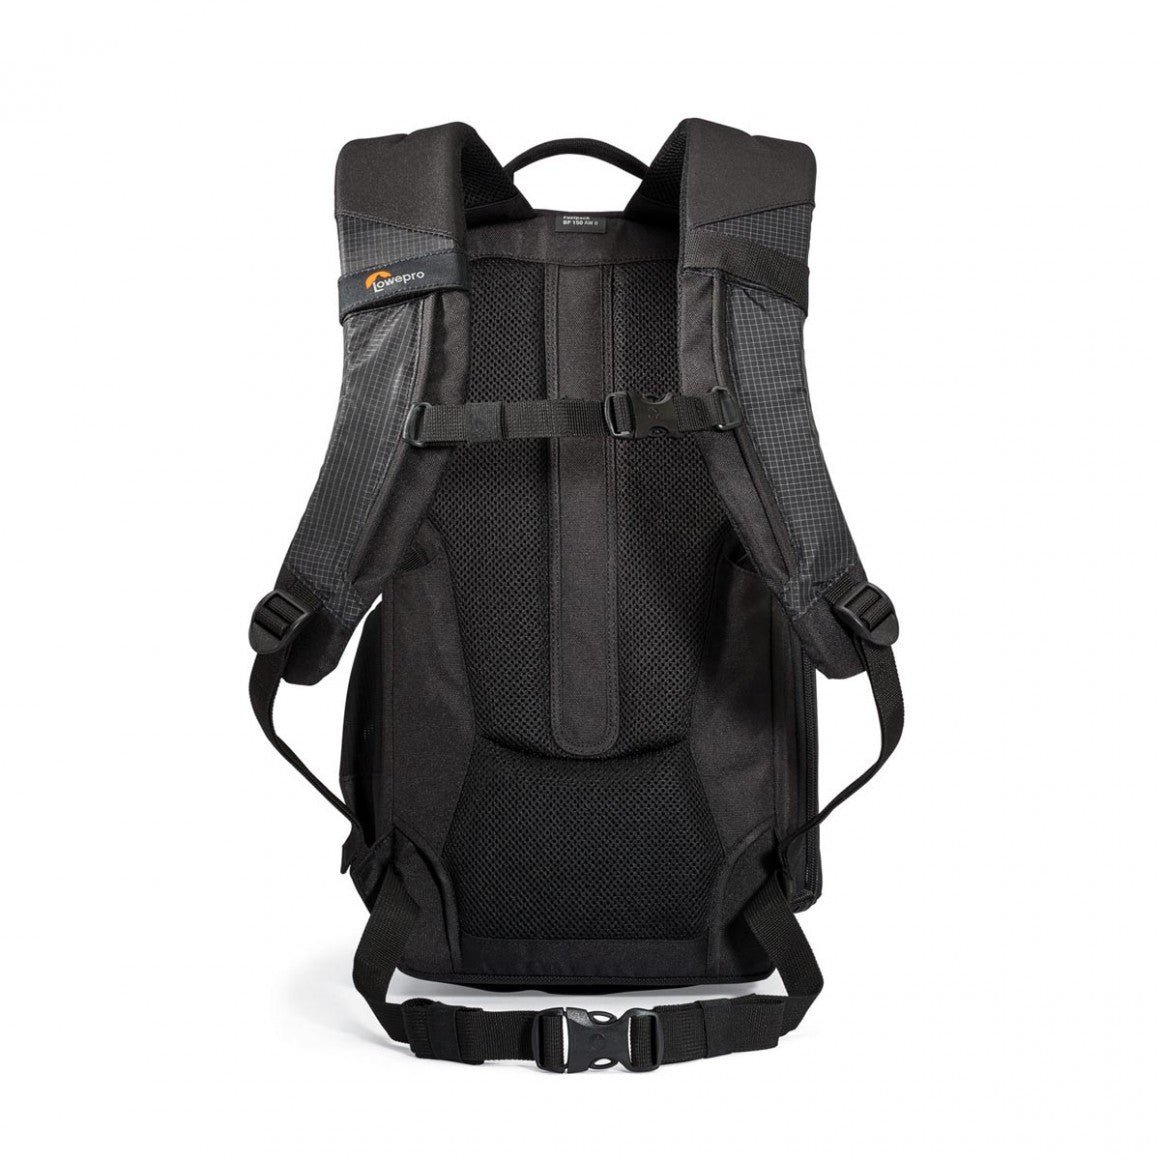 Lowepro Fastpack 150 AW II Backpack (Black), bags backpacks, Lowepro - Pictureline  - 3